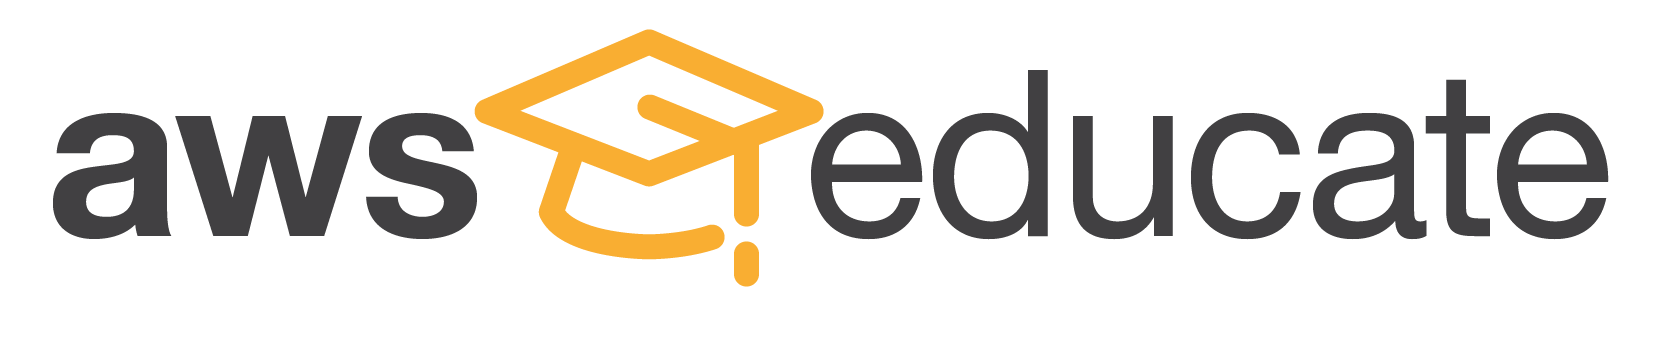 aws-educate-logo.png